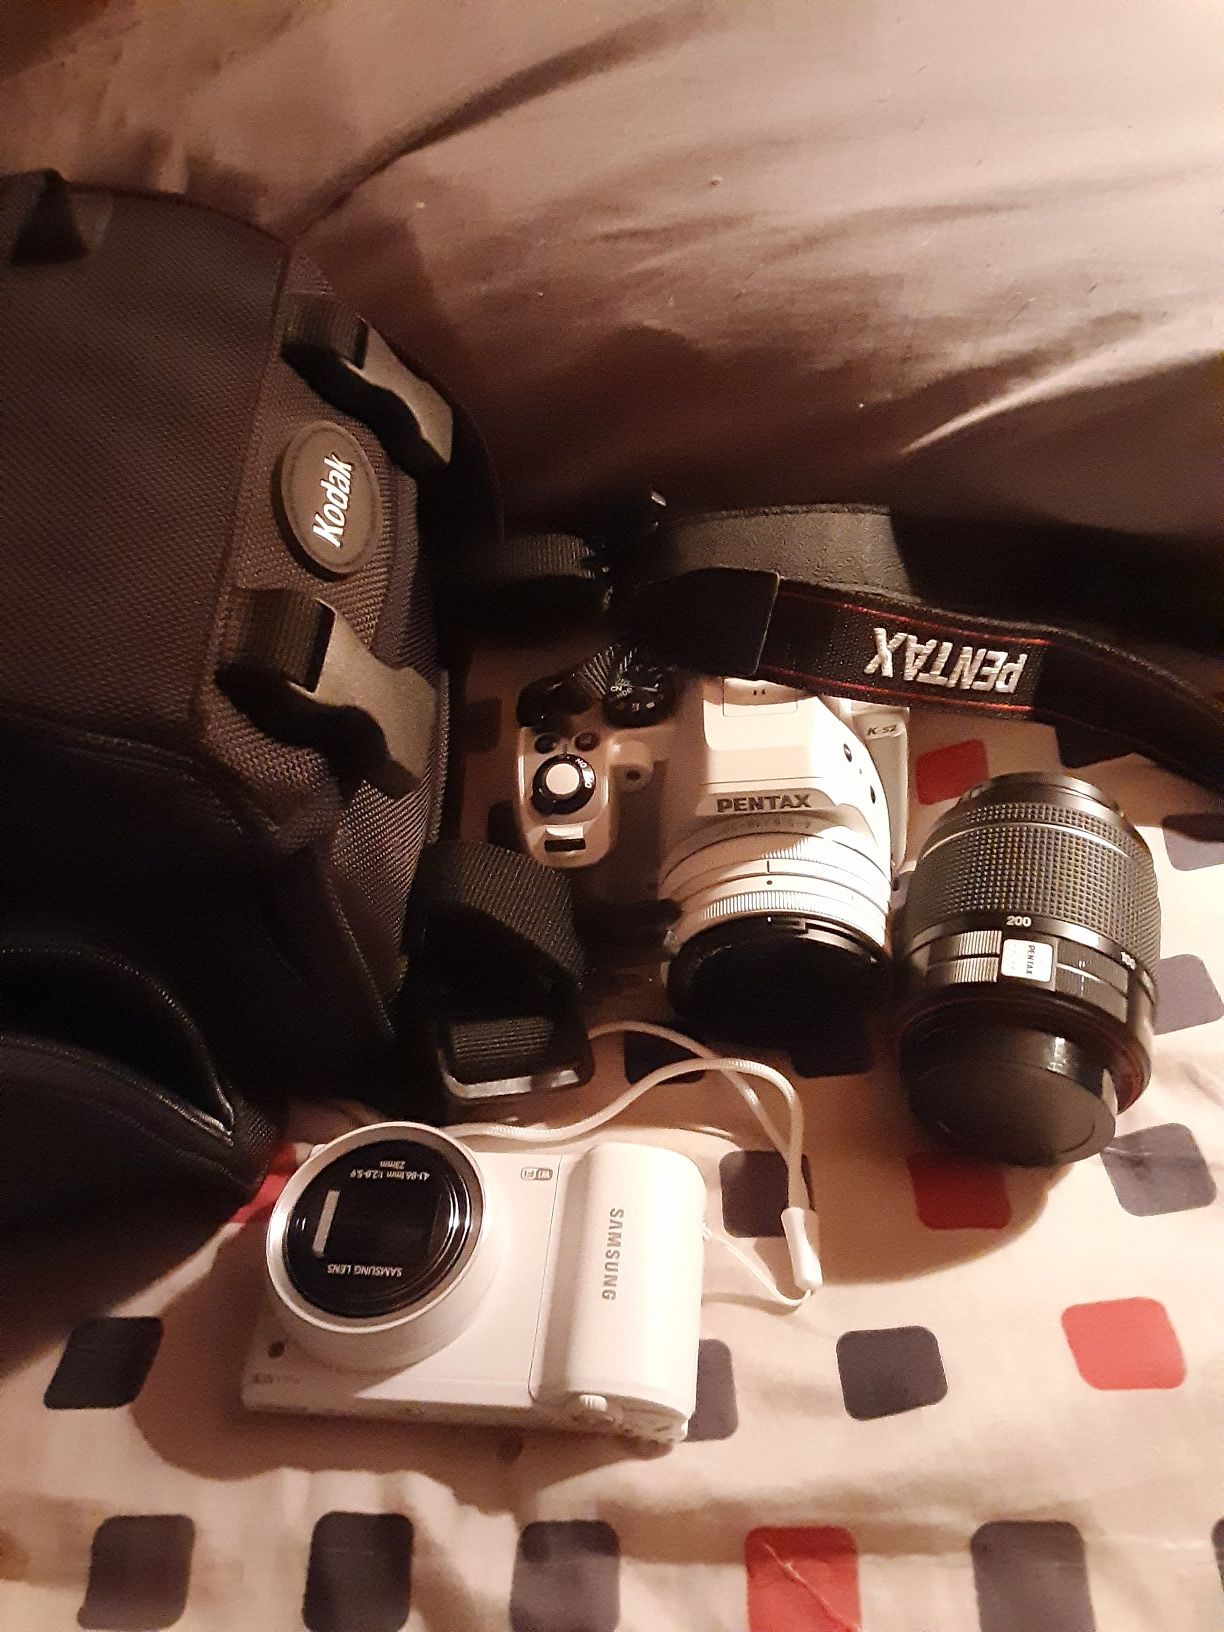 Pentax and Samsung cameras with bag